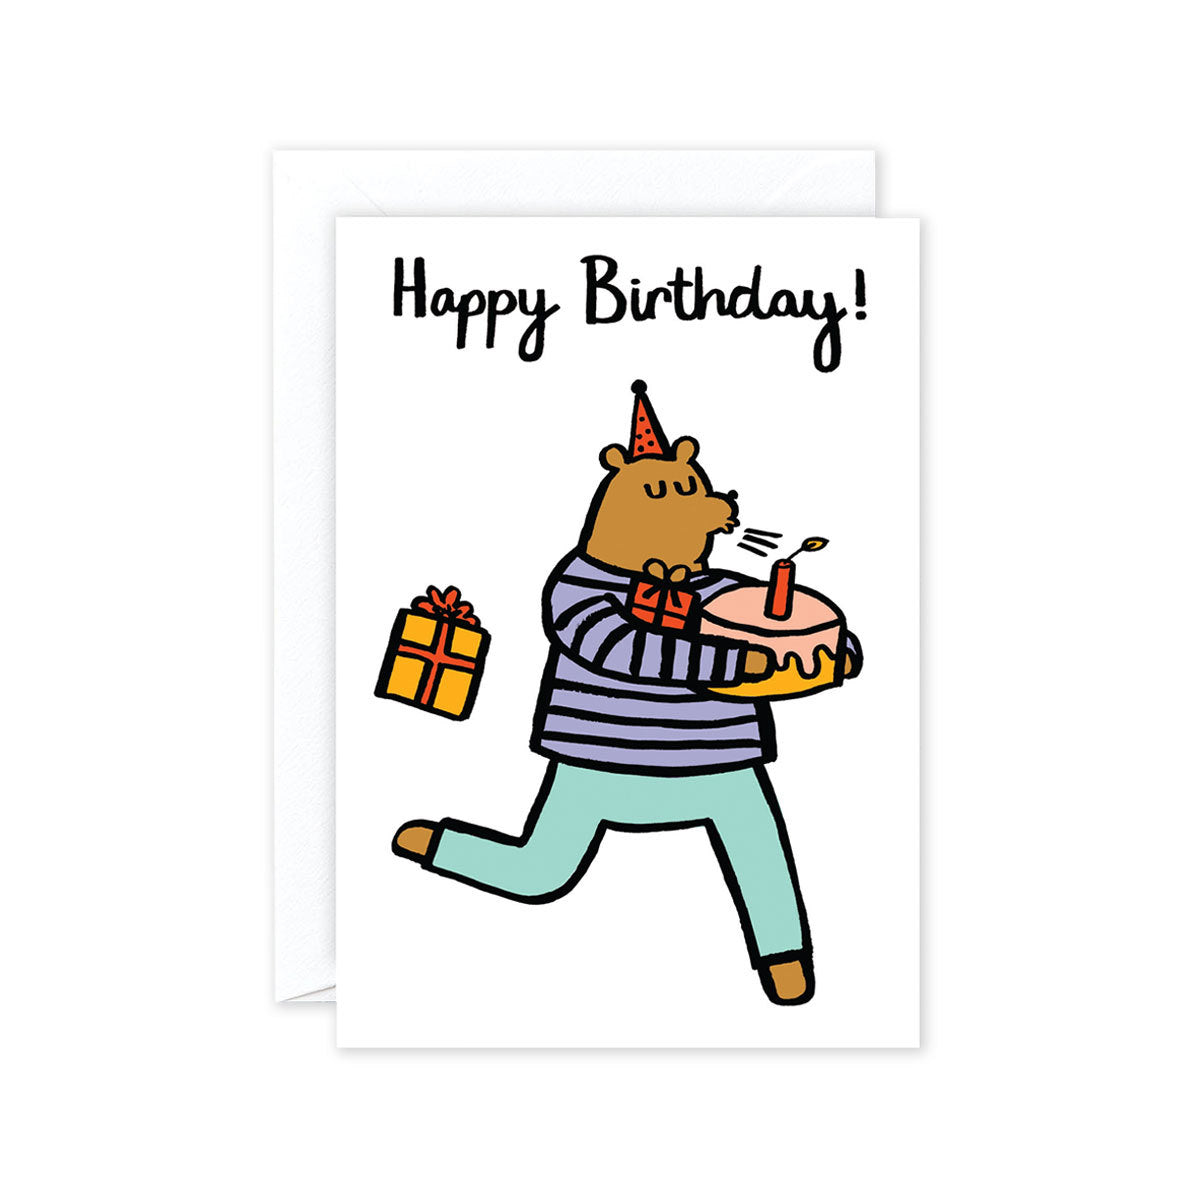 Birthday Greetings Cards